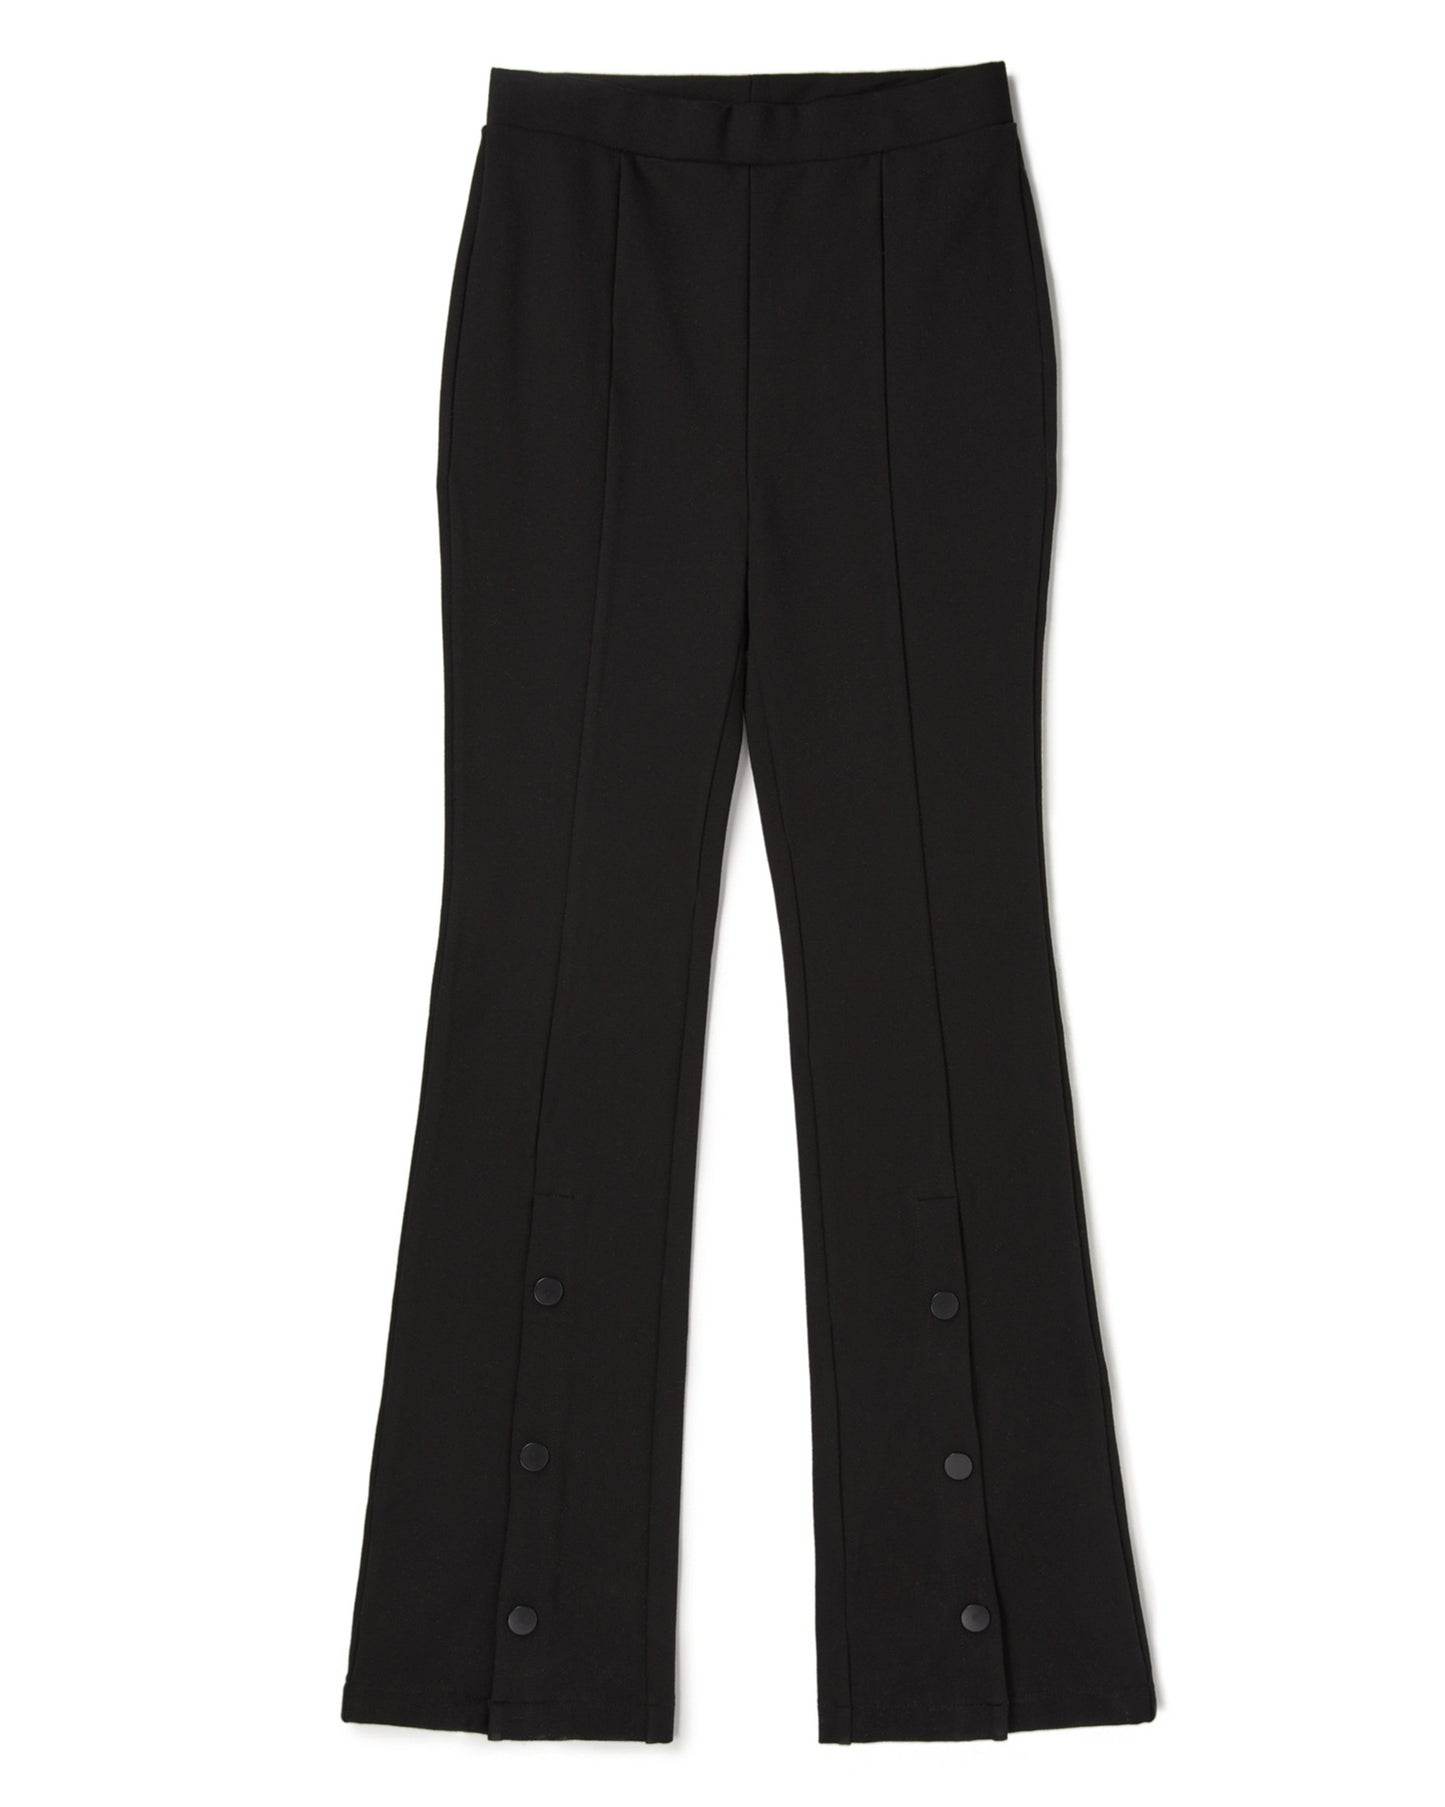 Ysabel Mora 70153 Flared Button Leggings - Black high waisted stretch trouser leggings (treggings) with split buttoned flare bottom. Flat view.